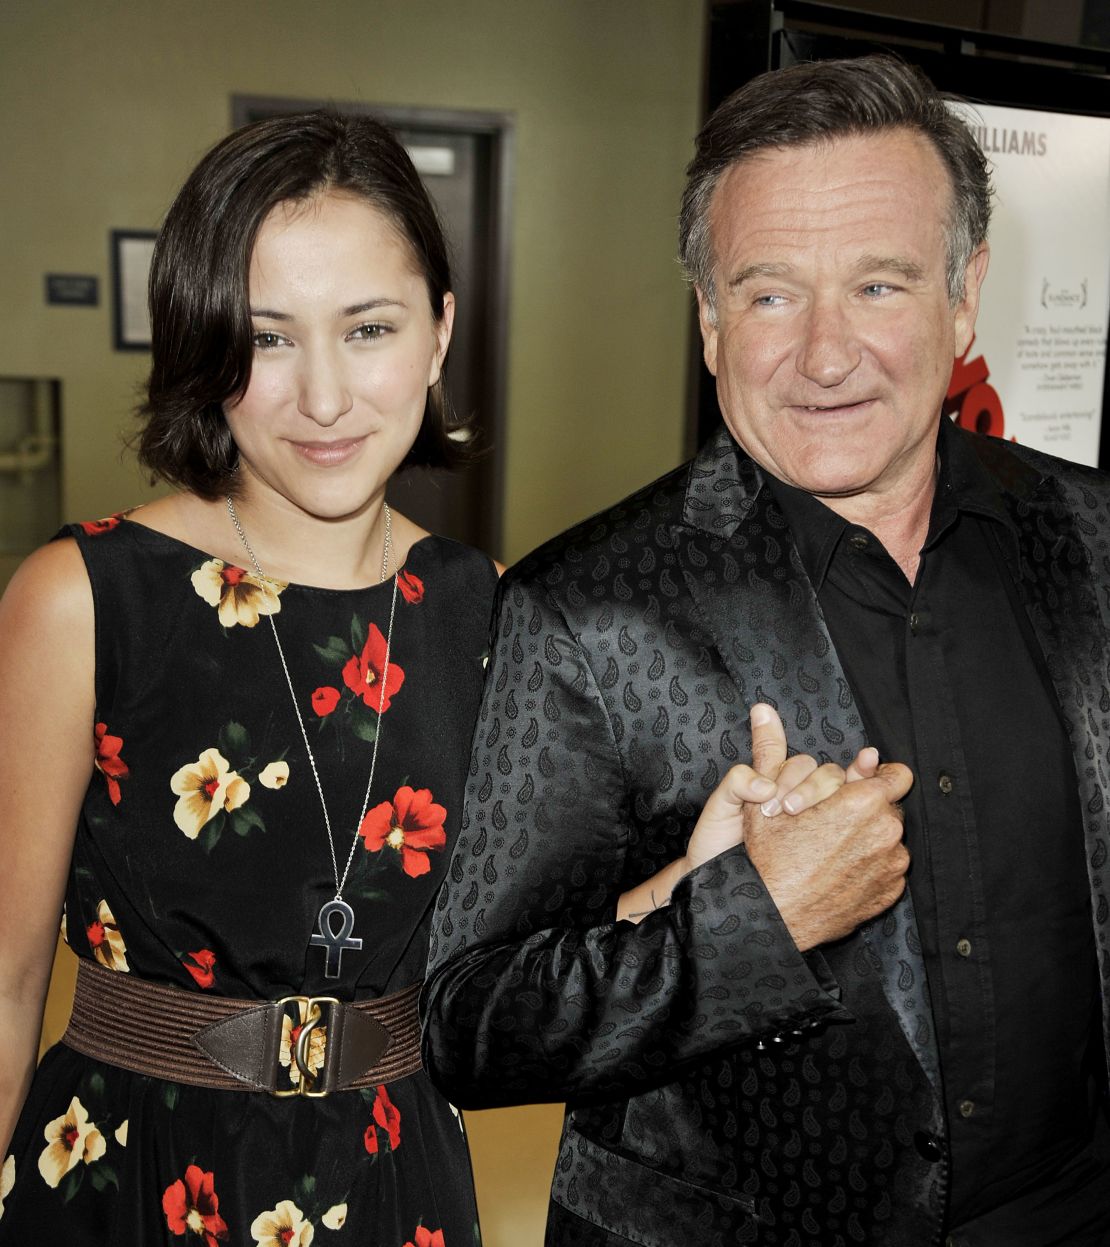 Zelda and Robin Williams attend a premiere in 2009.